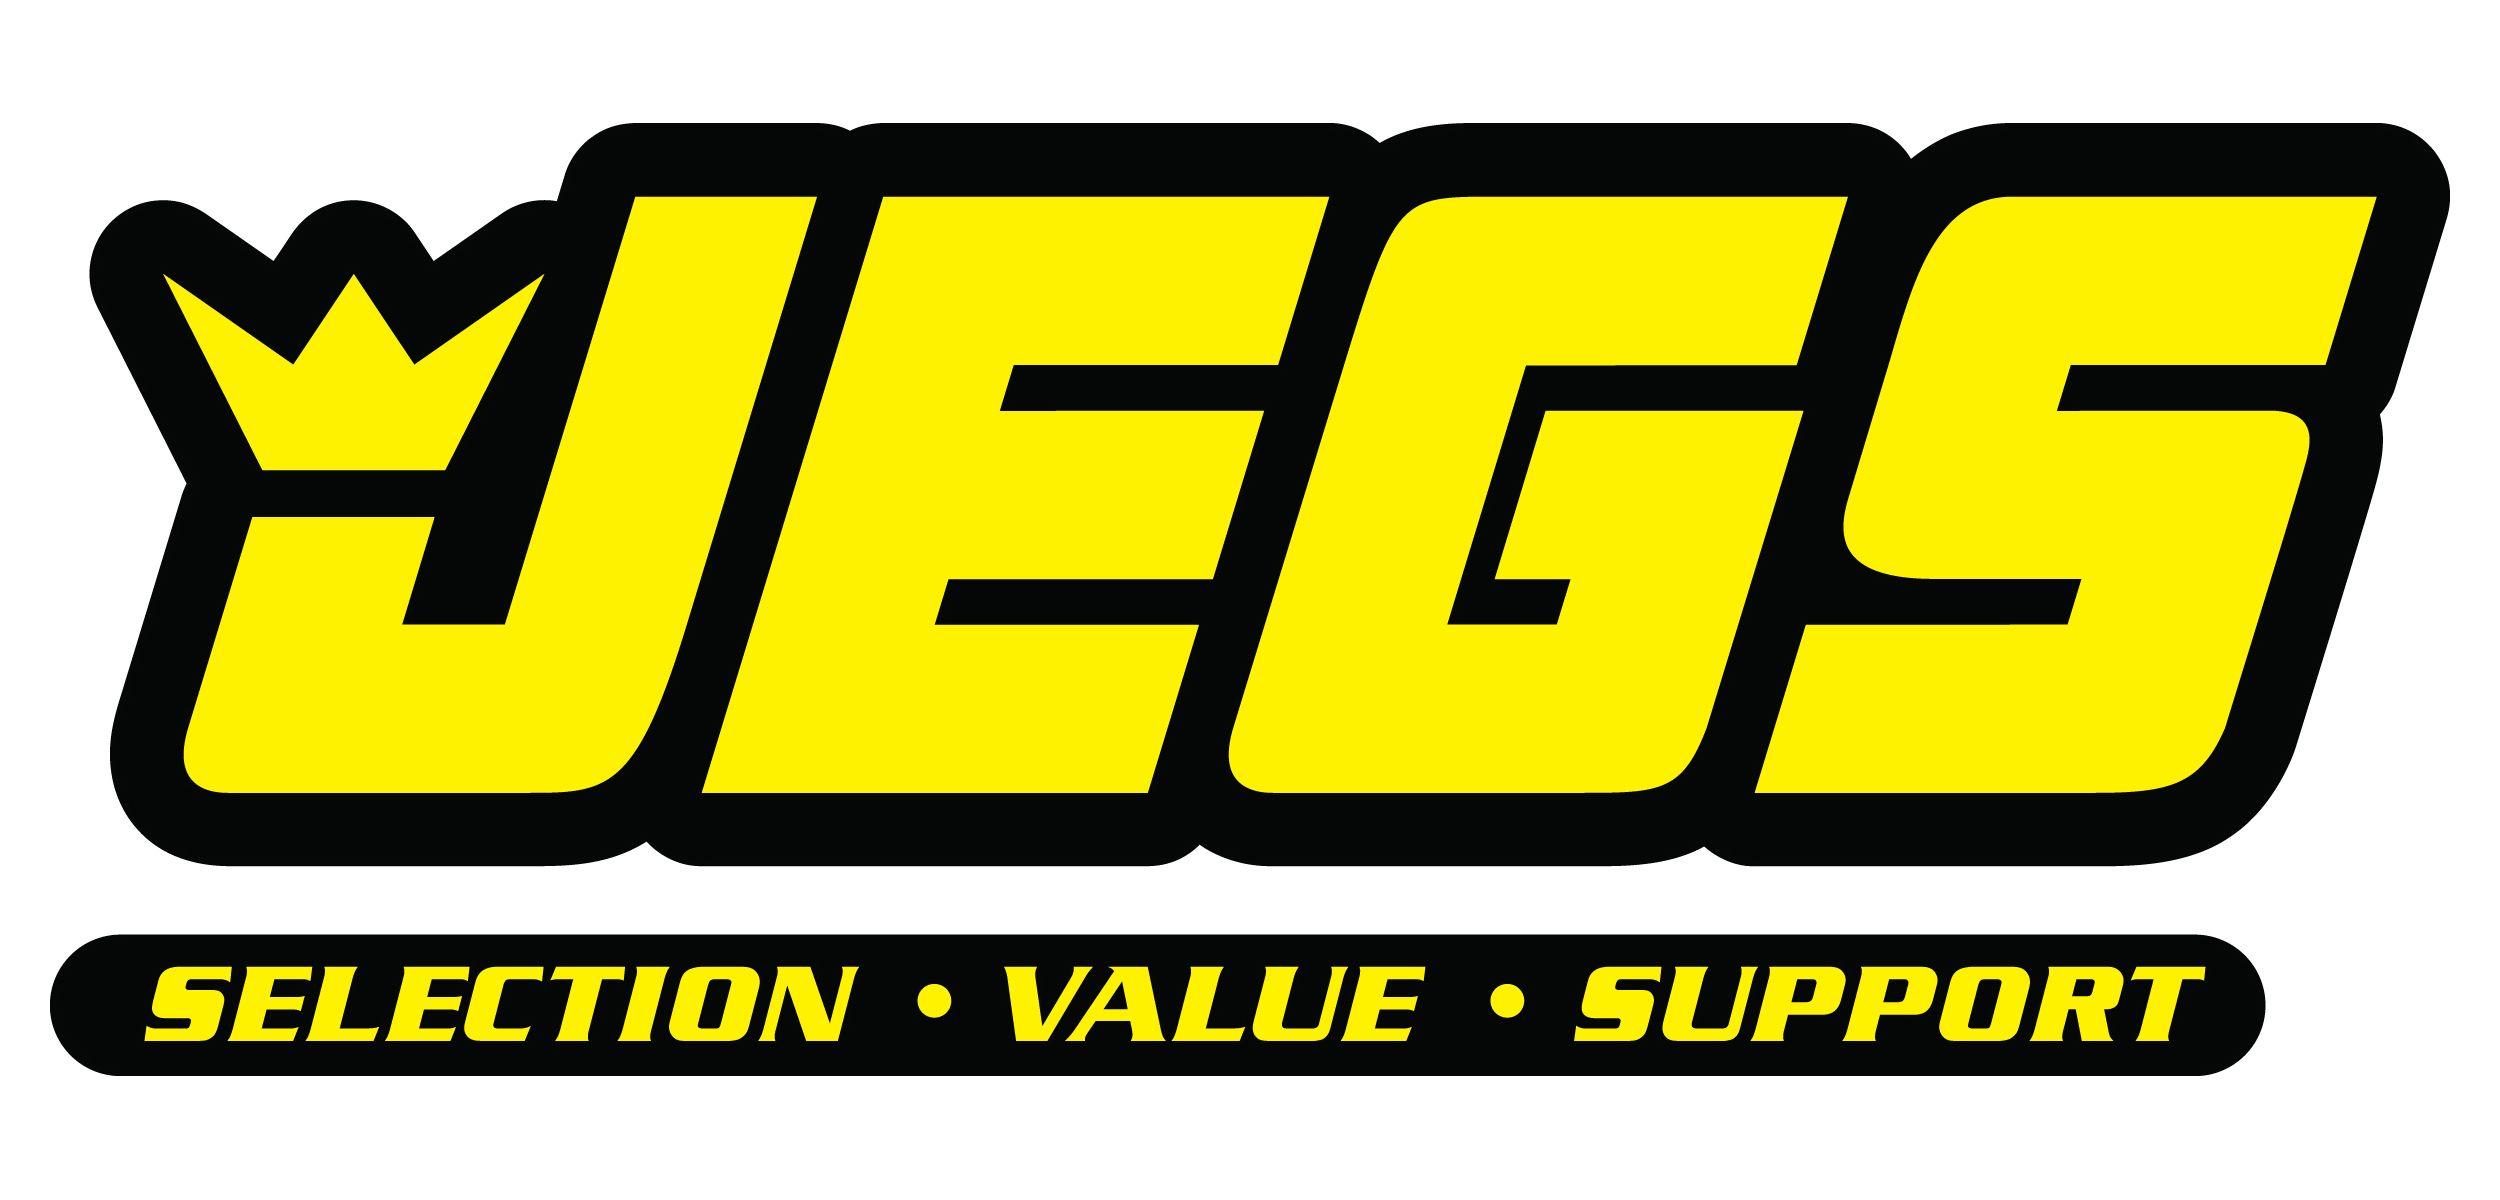 JEGS Logo - Logos & Brand Standards | teamjegs.com